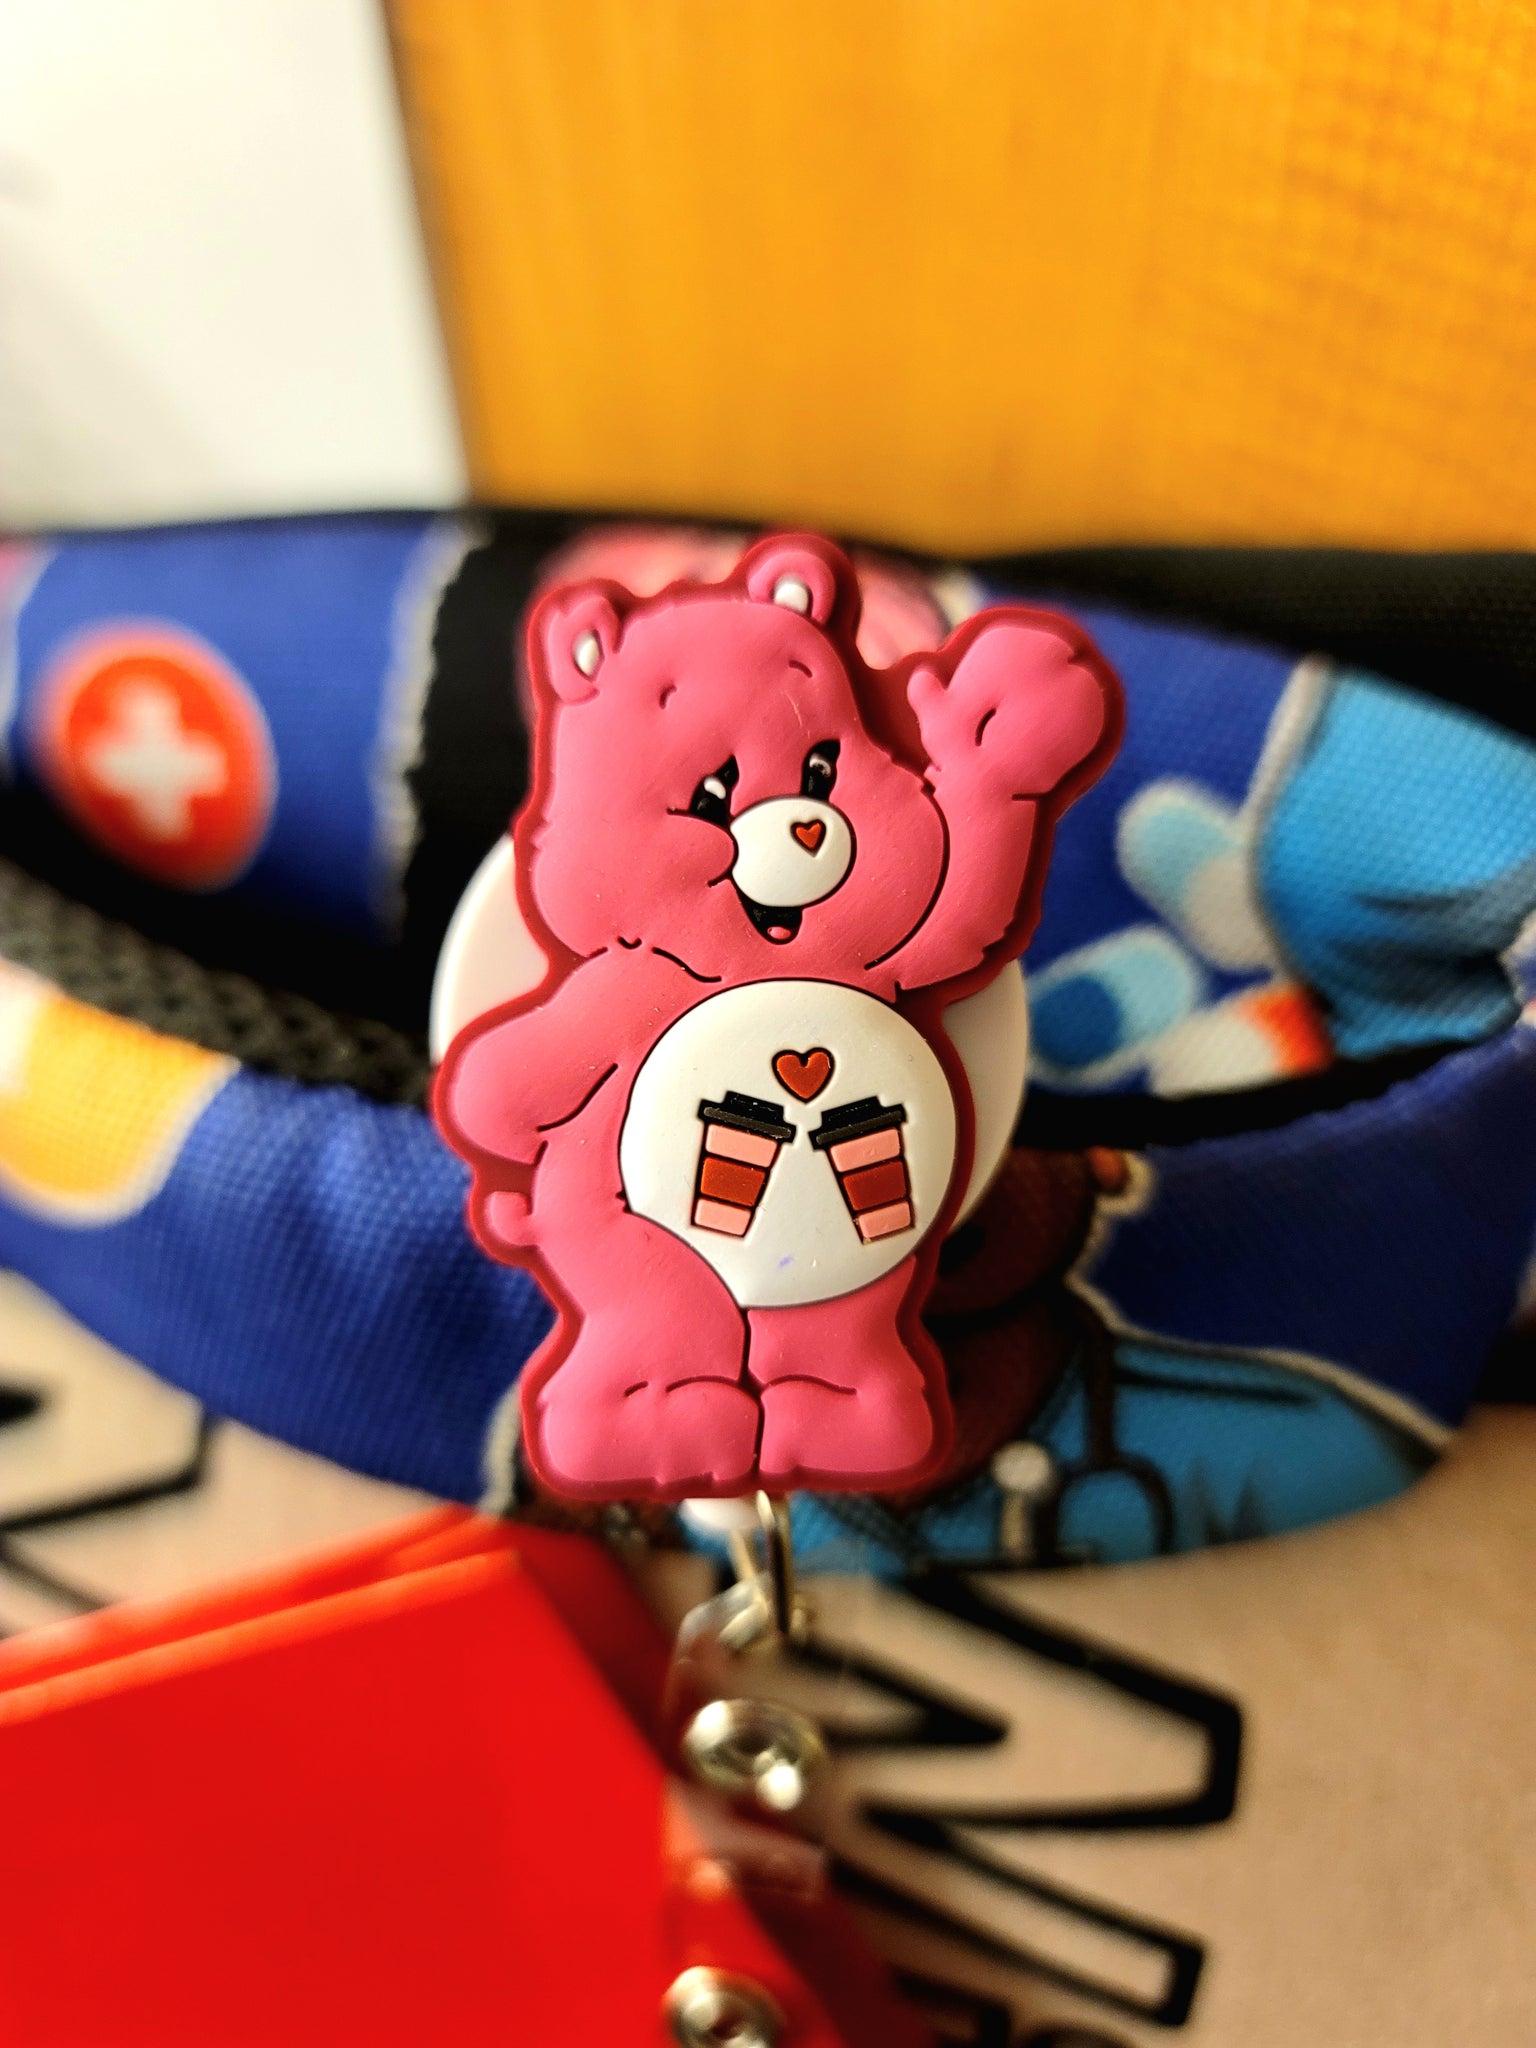 Pink Coffee Lovin' Healthcare Bear ID Badge Reel Unique Badge Design –  Reflections By Zana